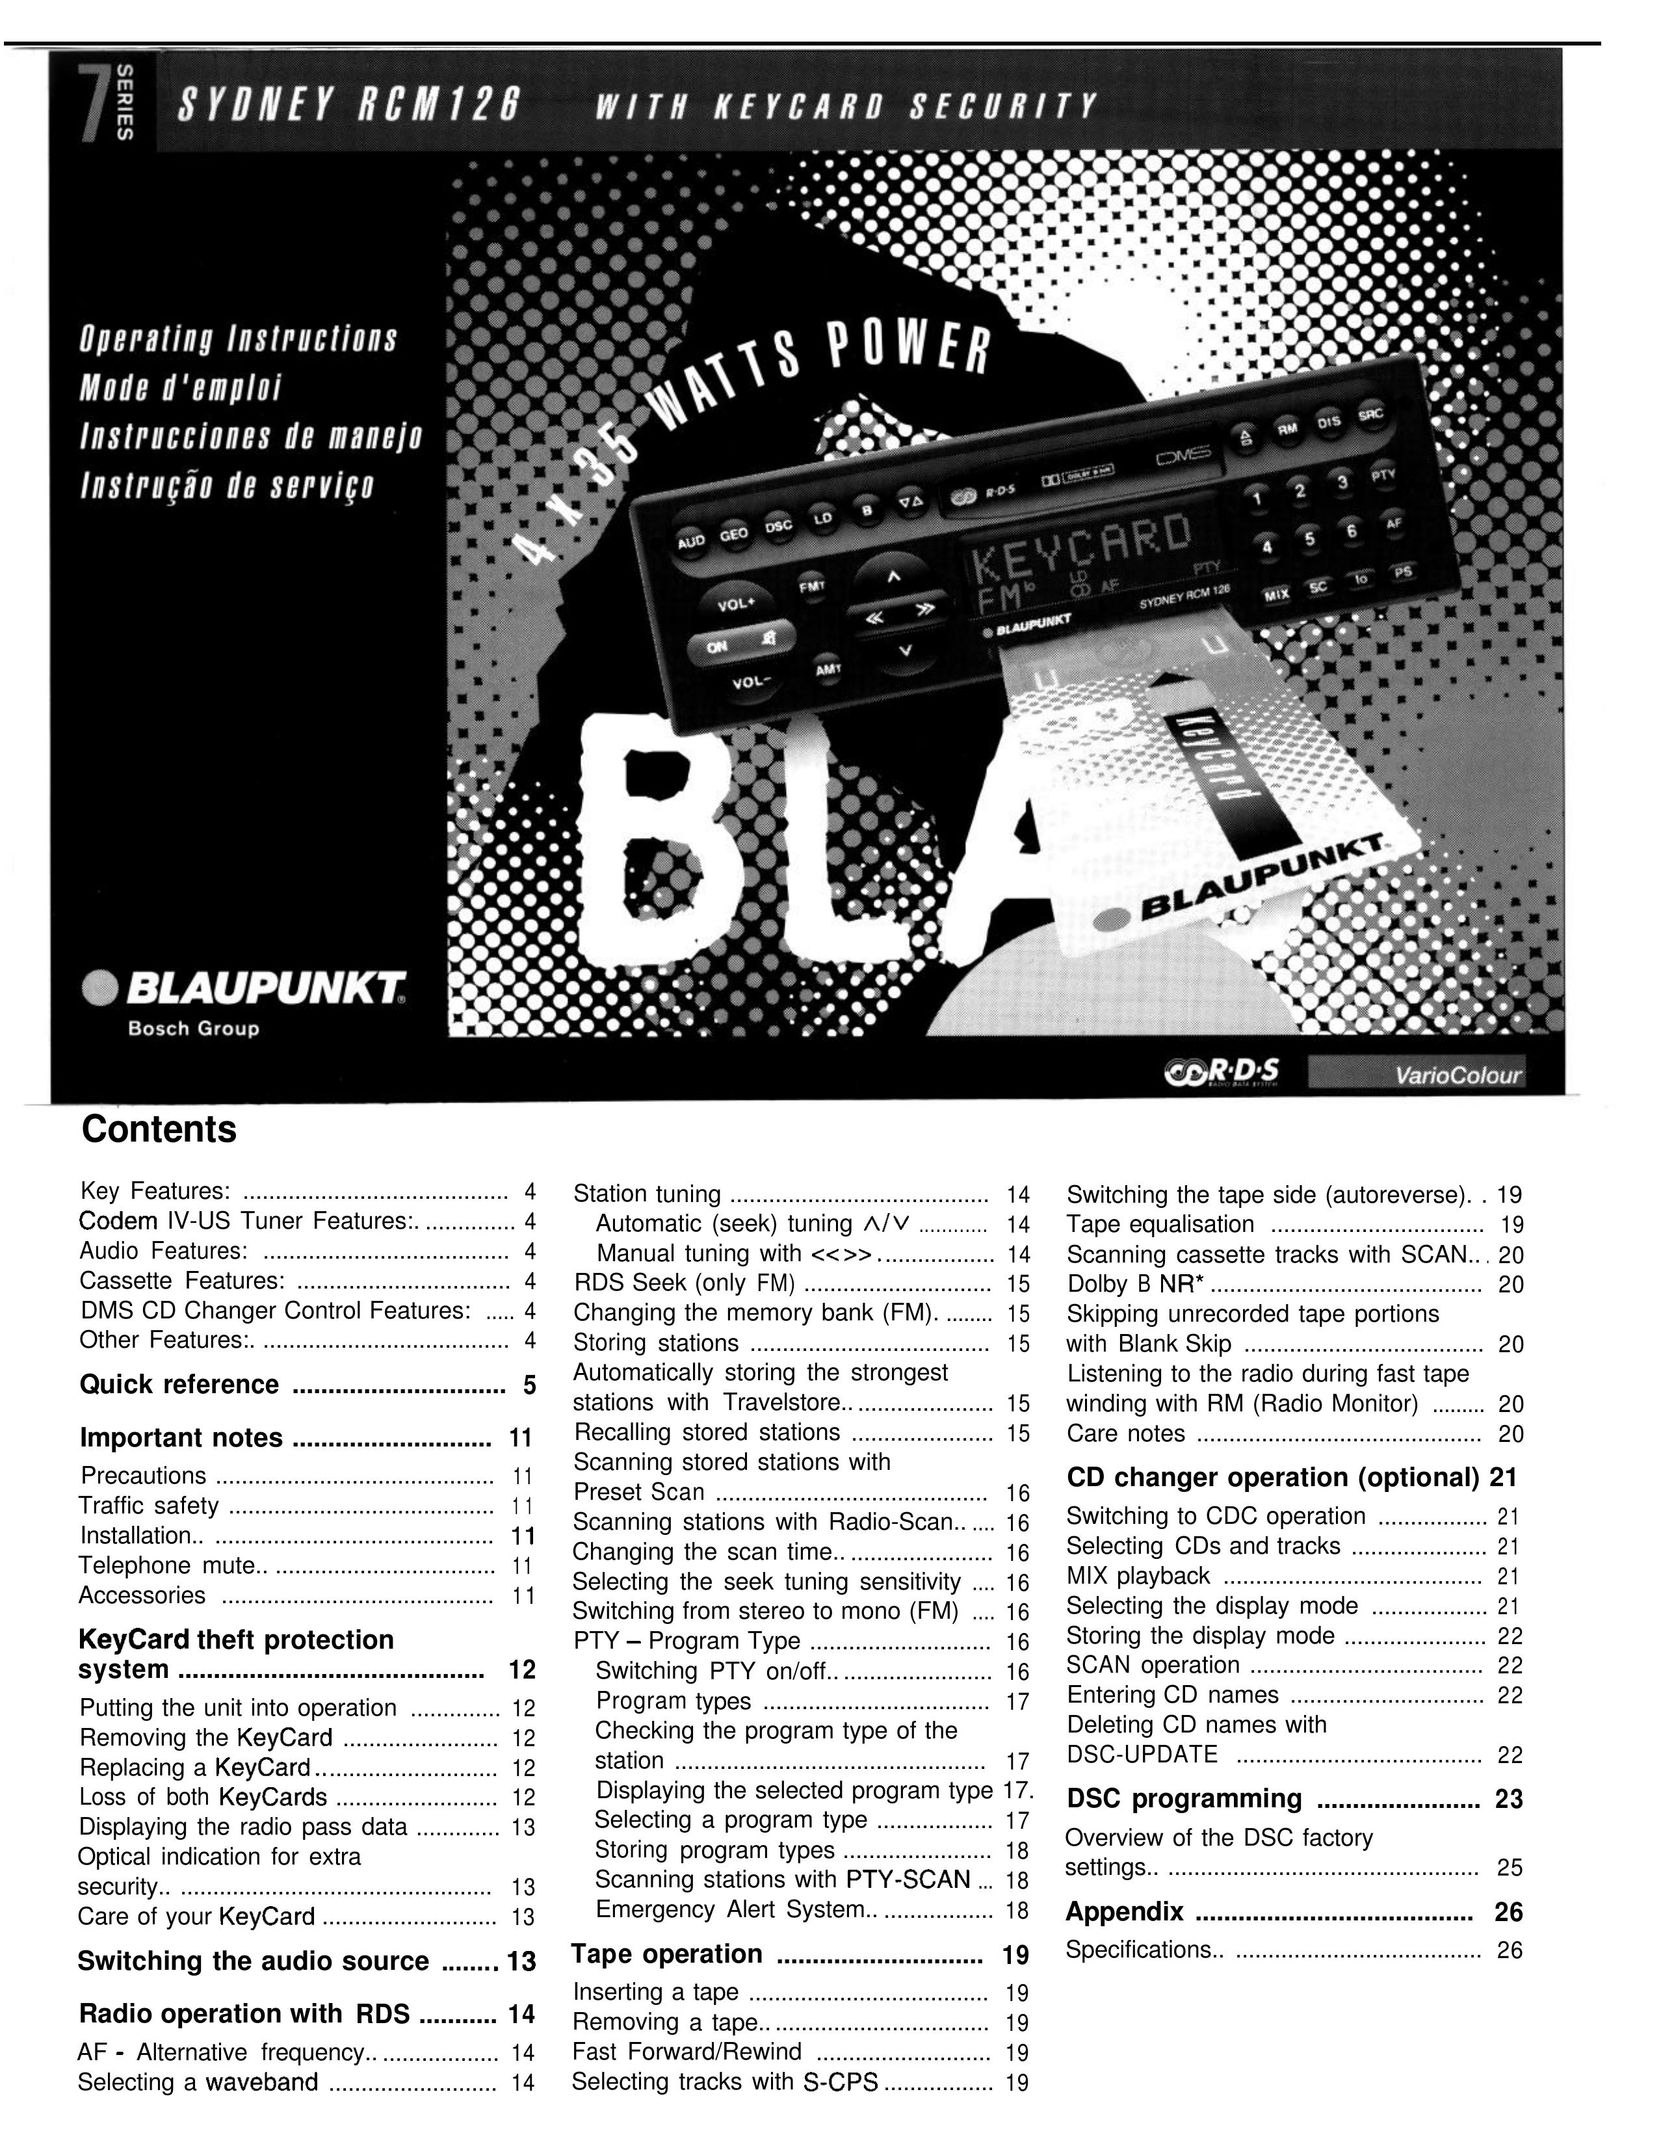 Blaupunkt Sydney RCM 126 CD Player User Manual